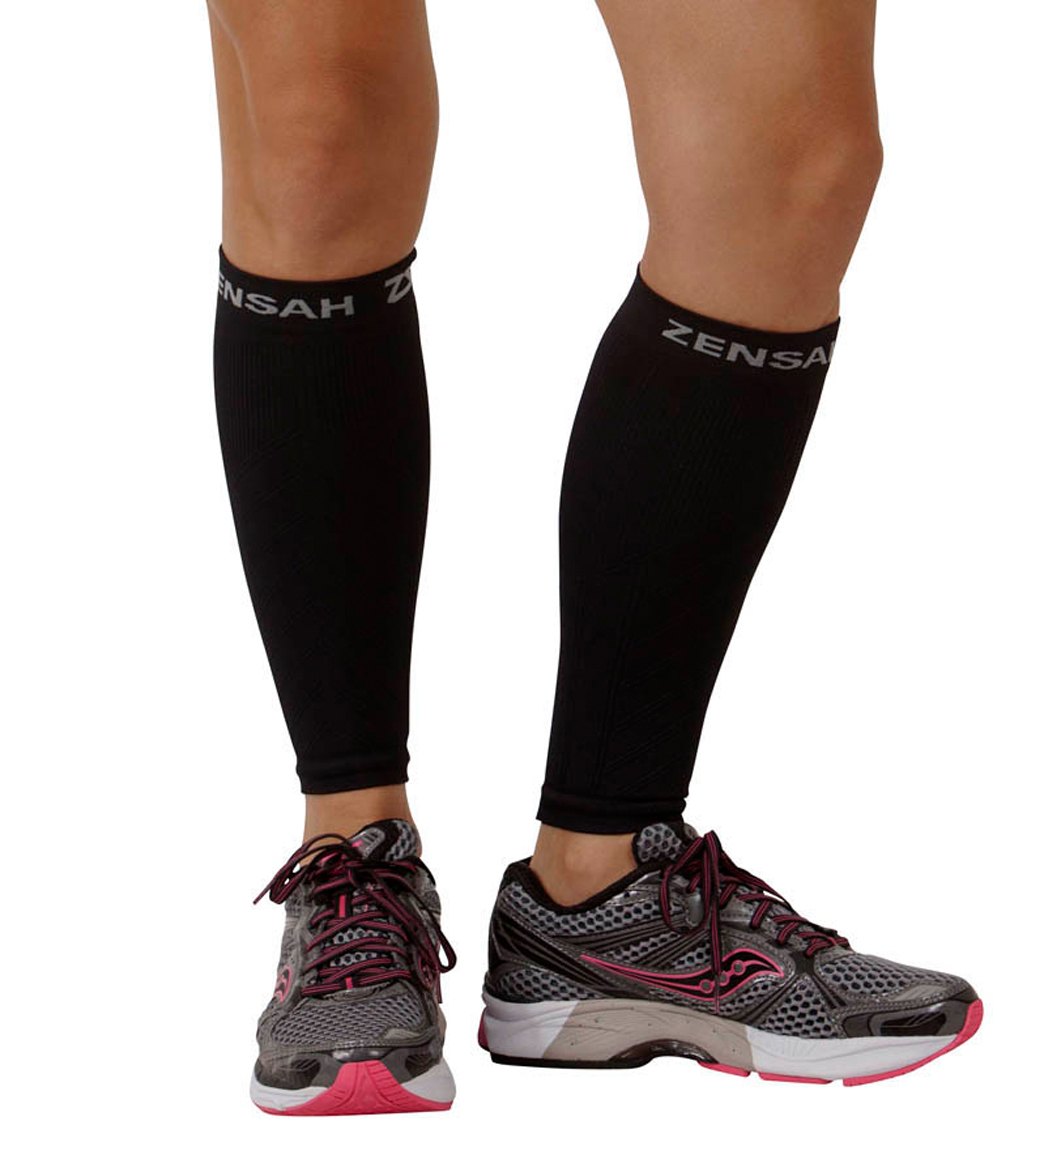 Zensah Compression Leg Sleeves Pair - Black X-Small/Small - Swimoutlet.com